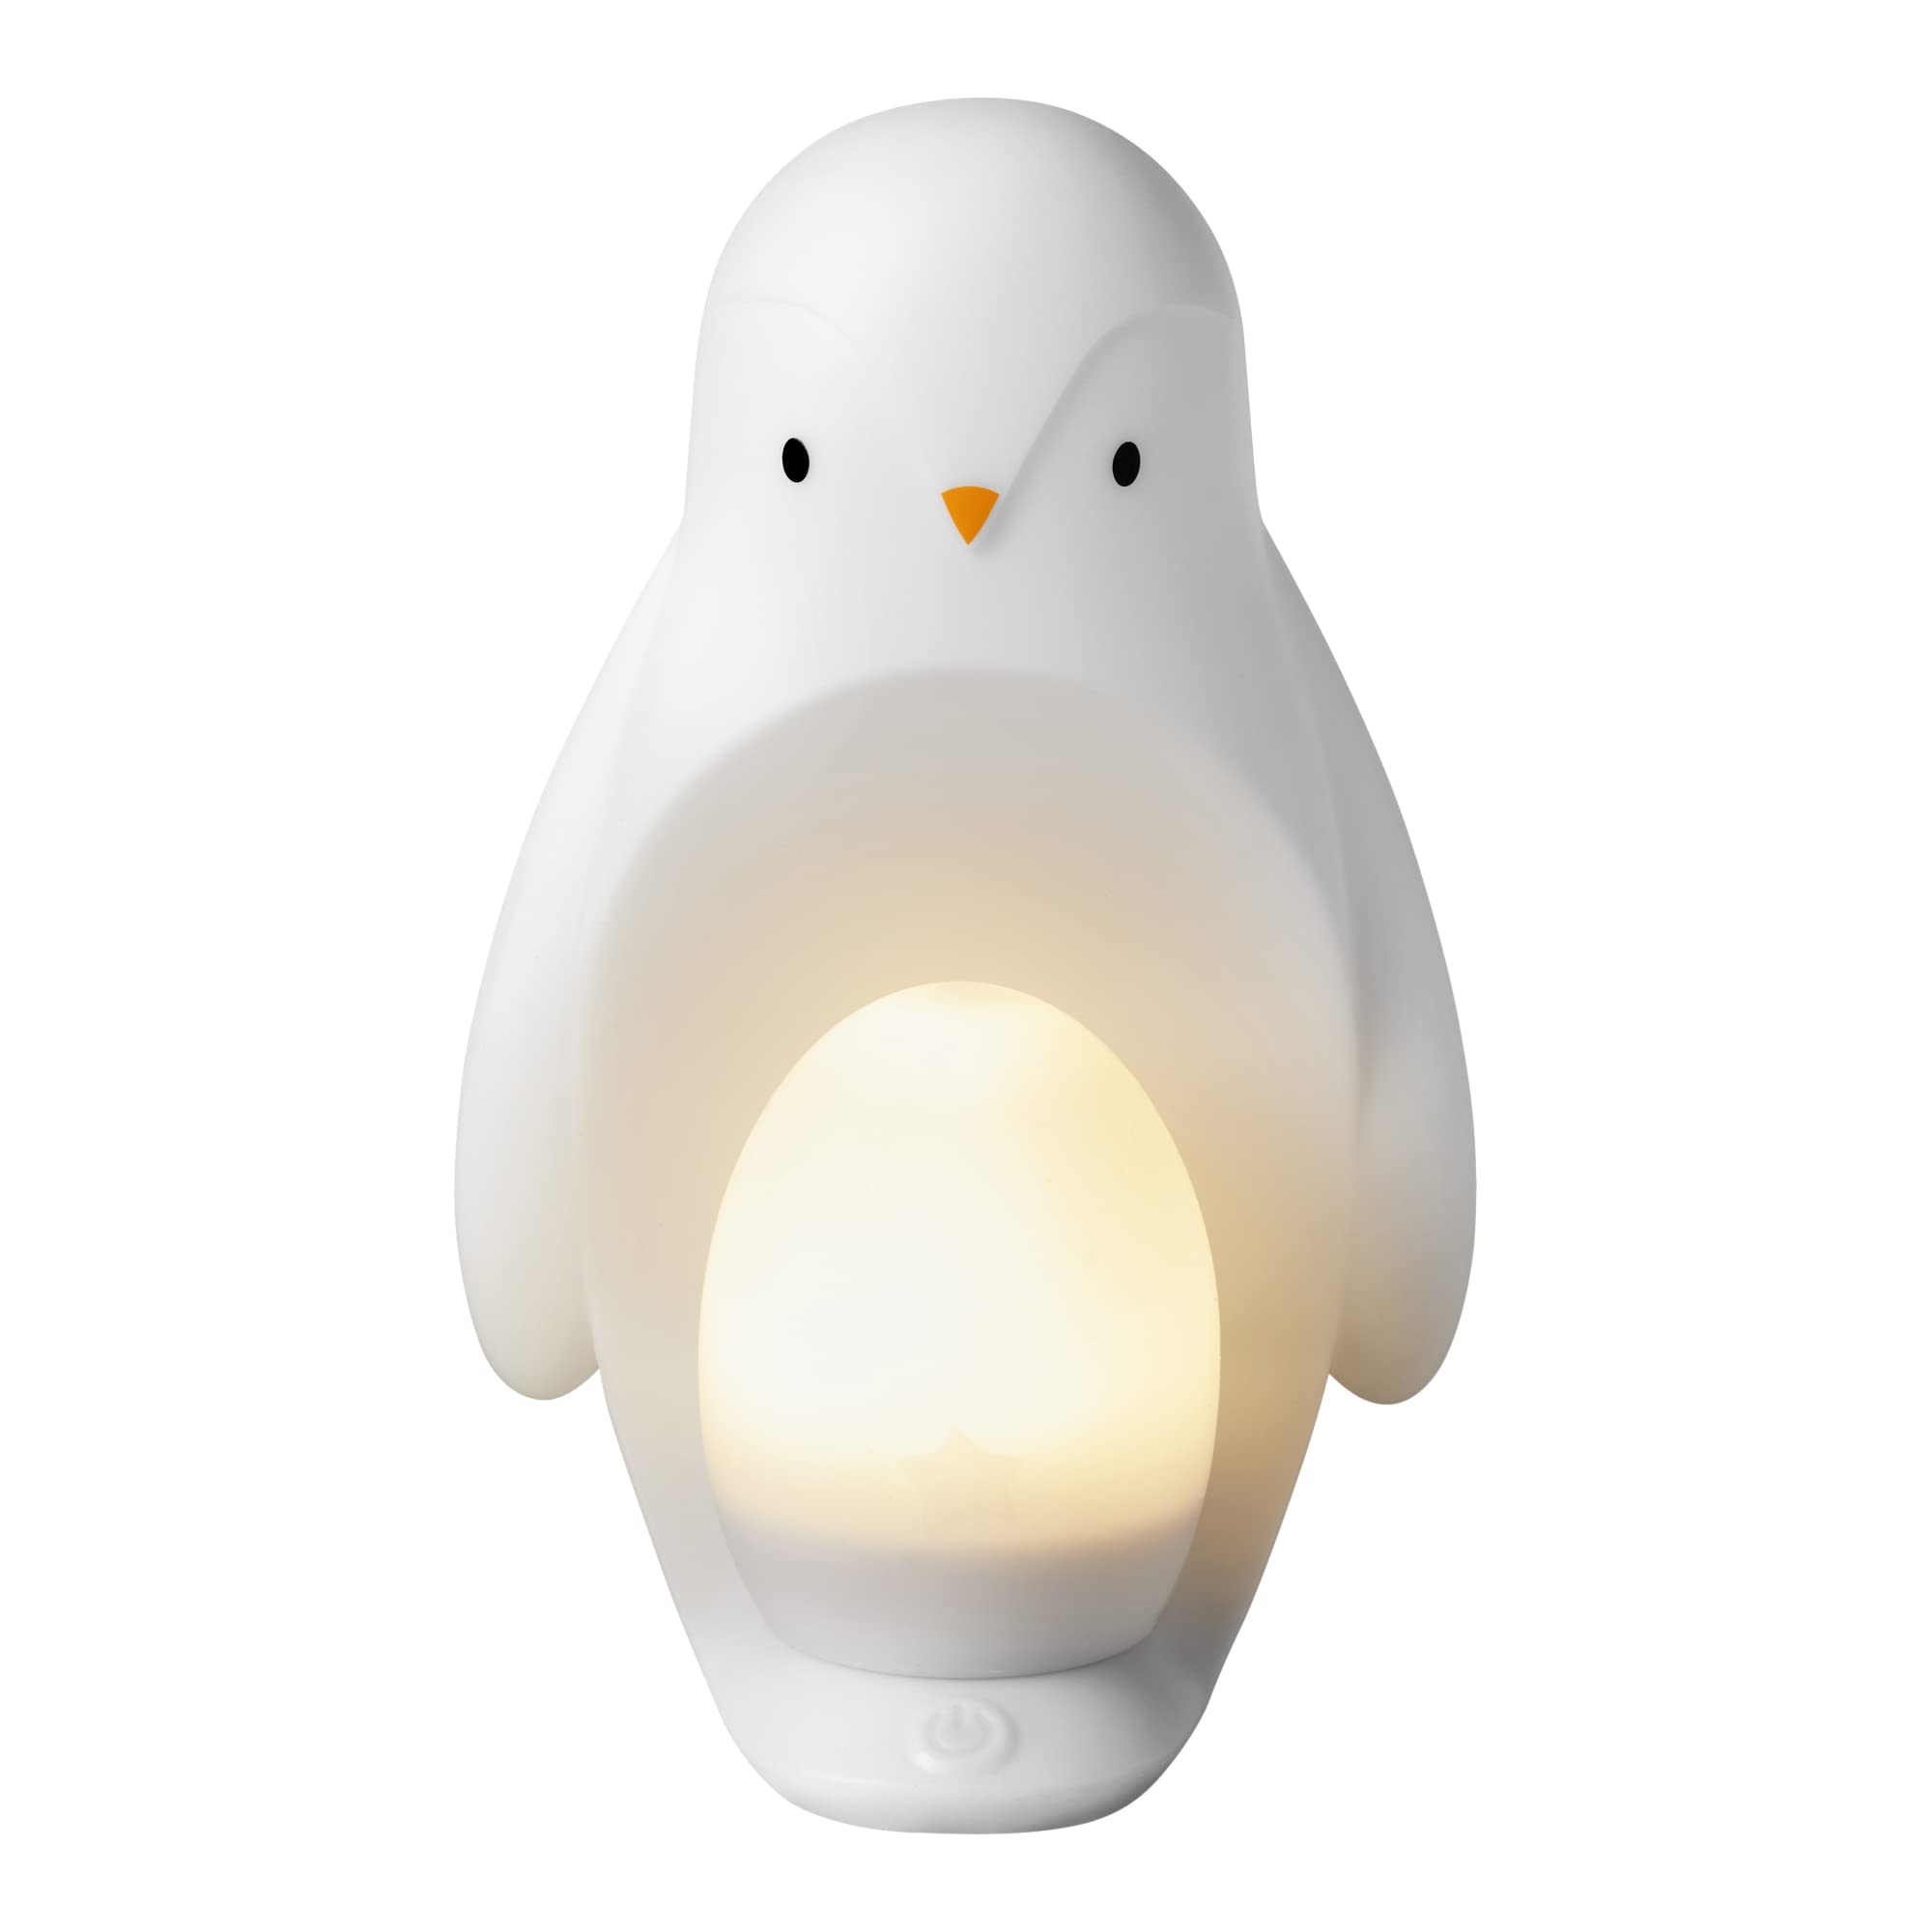 Tommee Tippee 2-in-1 Portable Penguin Nursery Night Light with Portable Egg  Light, Adjustable Brightness, USB-Powered – RissaBaby Nursery